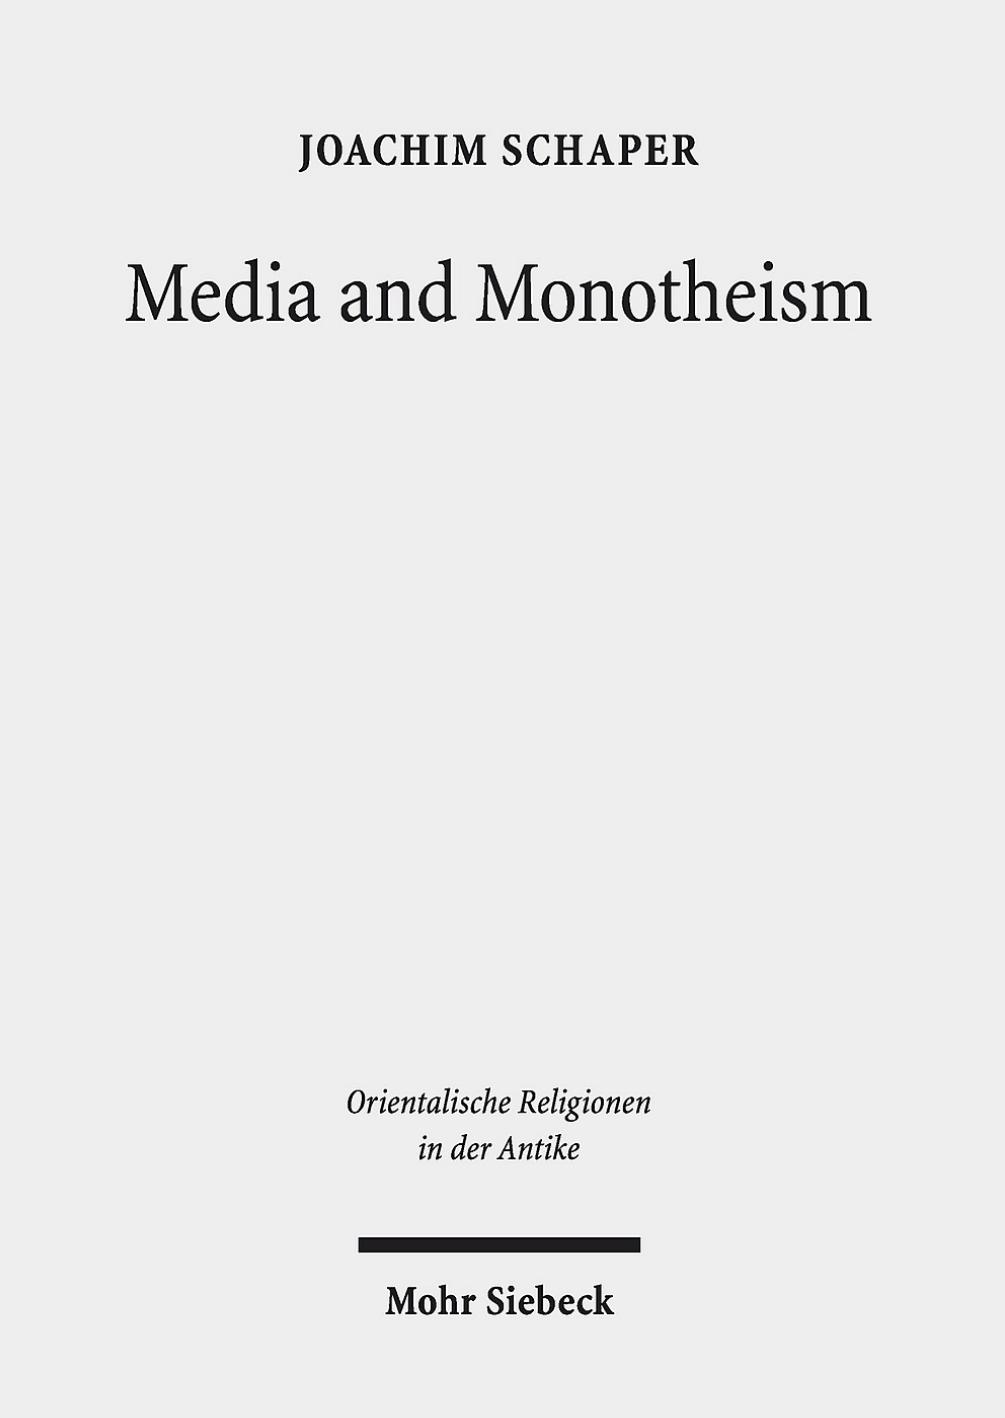 Media and Monotheism by Joachim Schaper